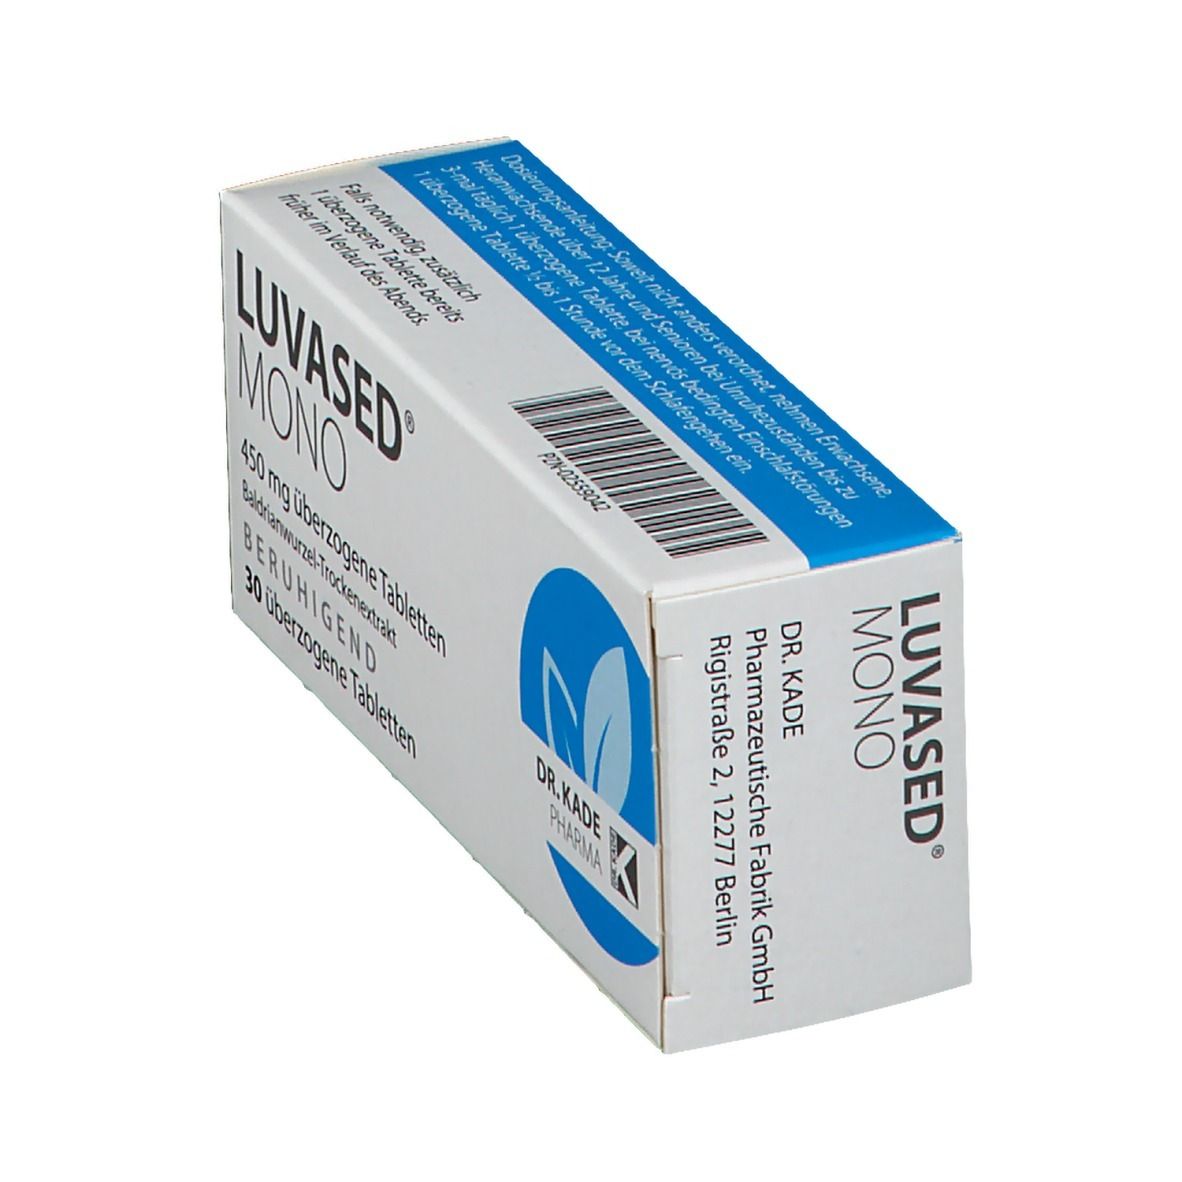 Luvased® mono 450 mg